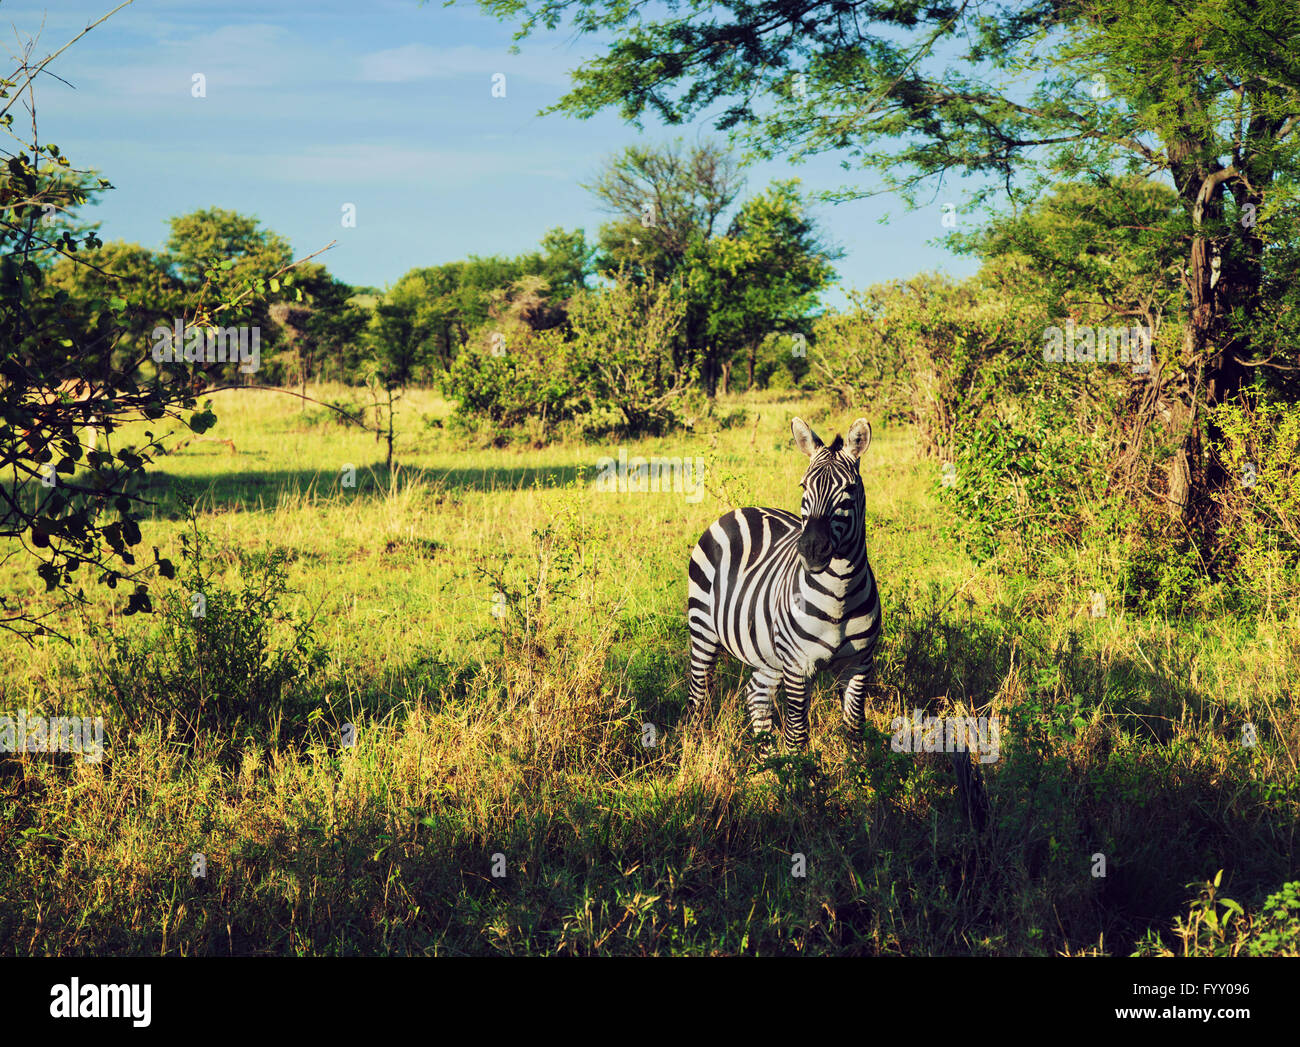 Zebra in grass on African savanna. Stock Photo